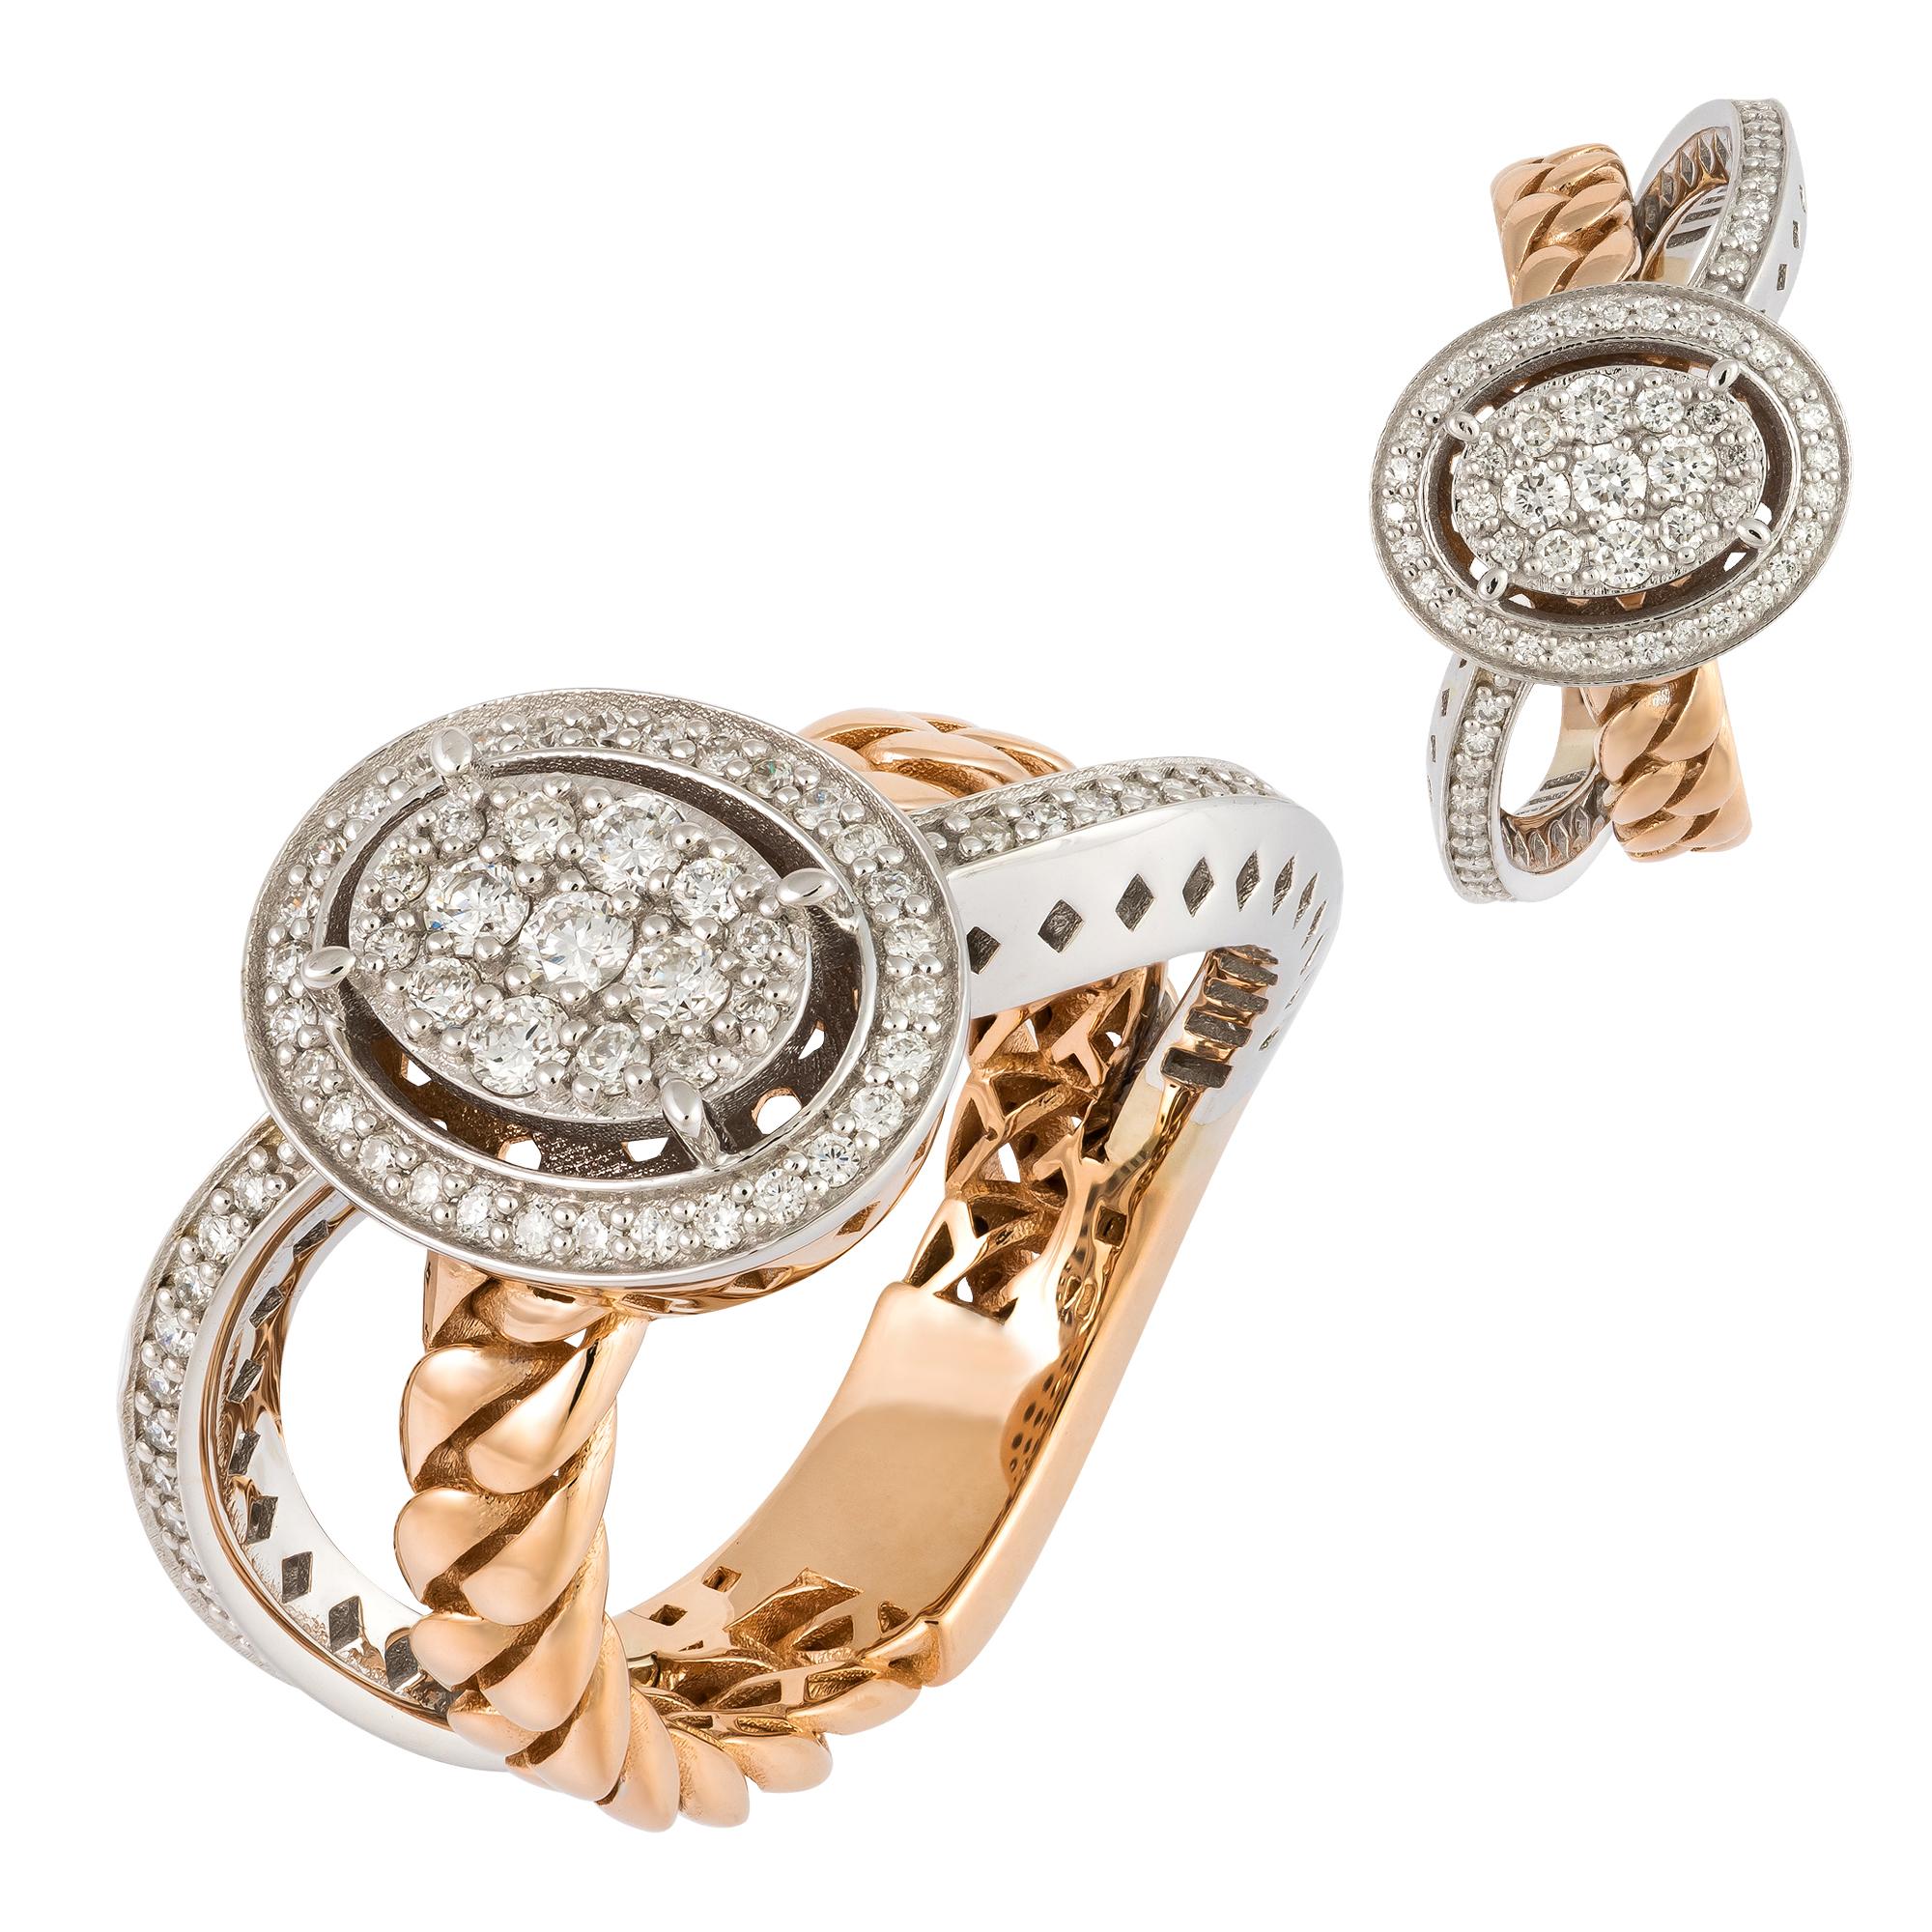 For Sale:  Stunning White Pink 18K Gold White Diamond Ring for Her 2